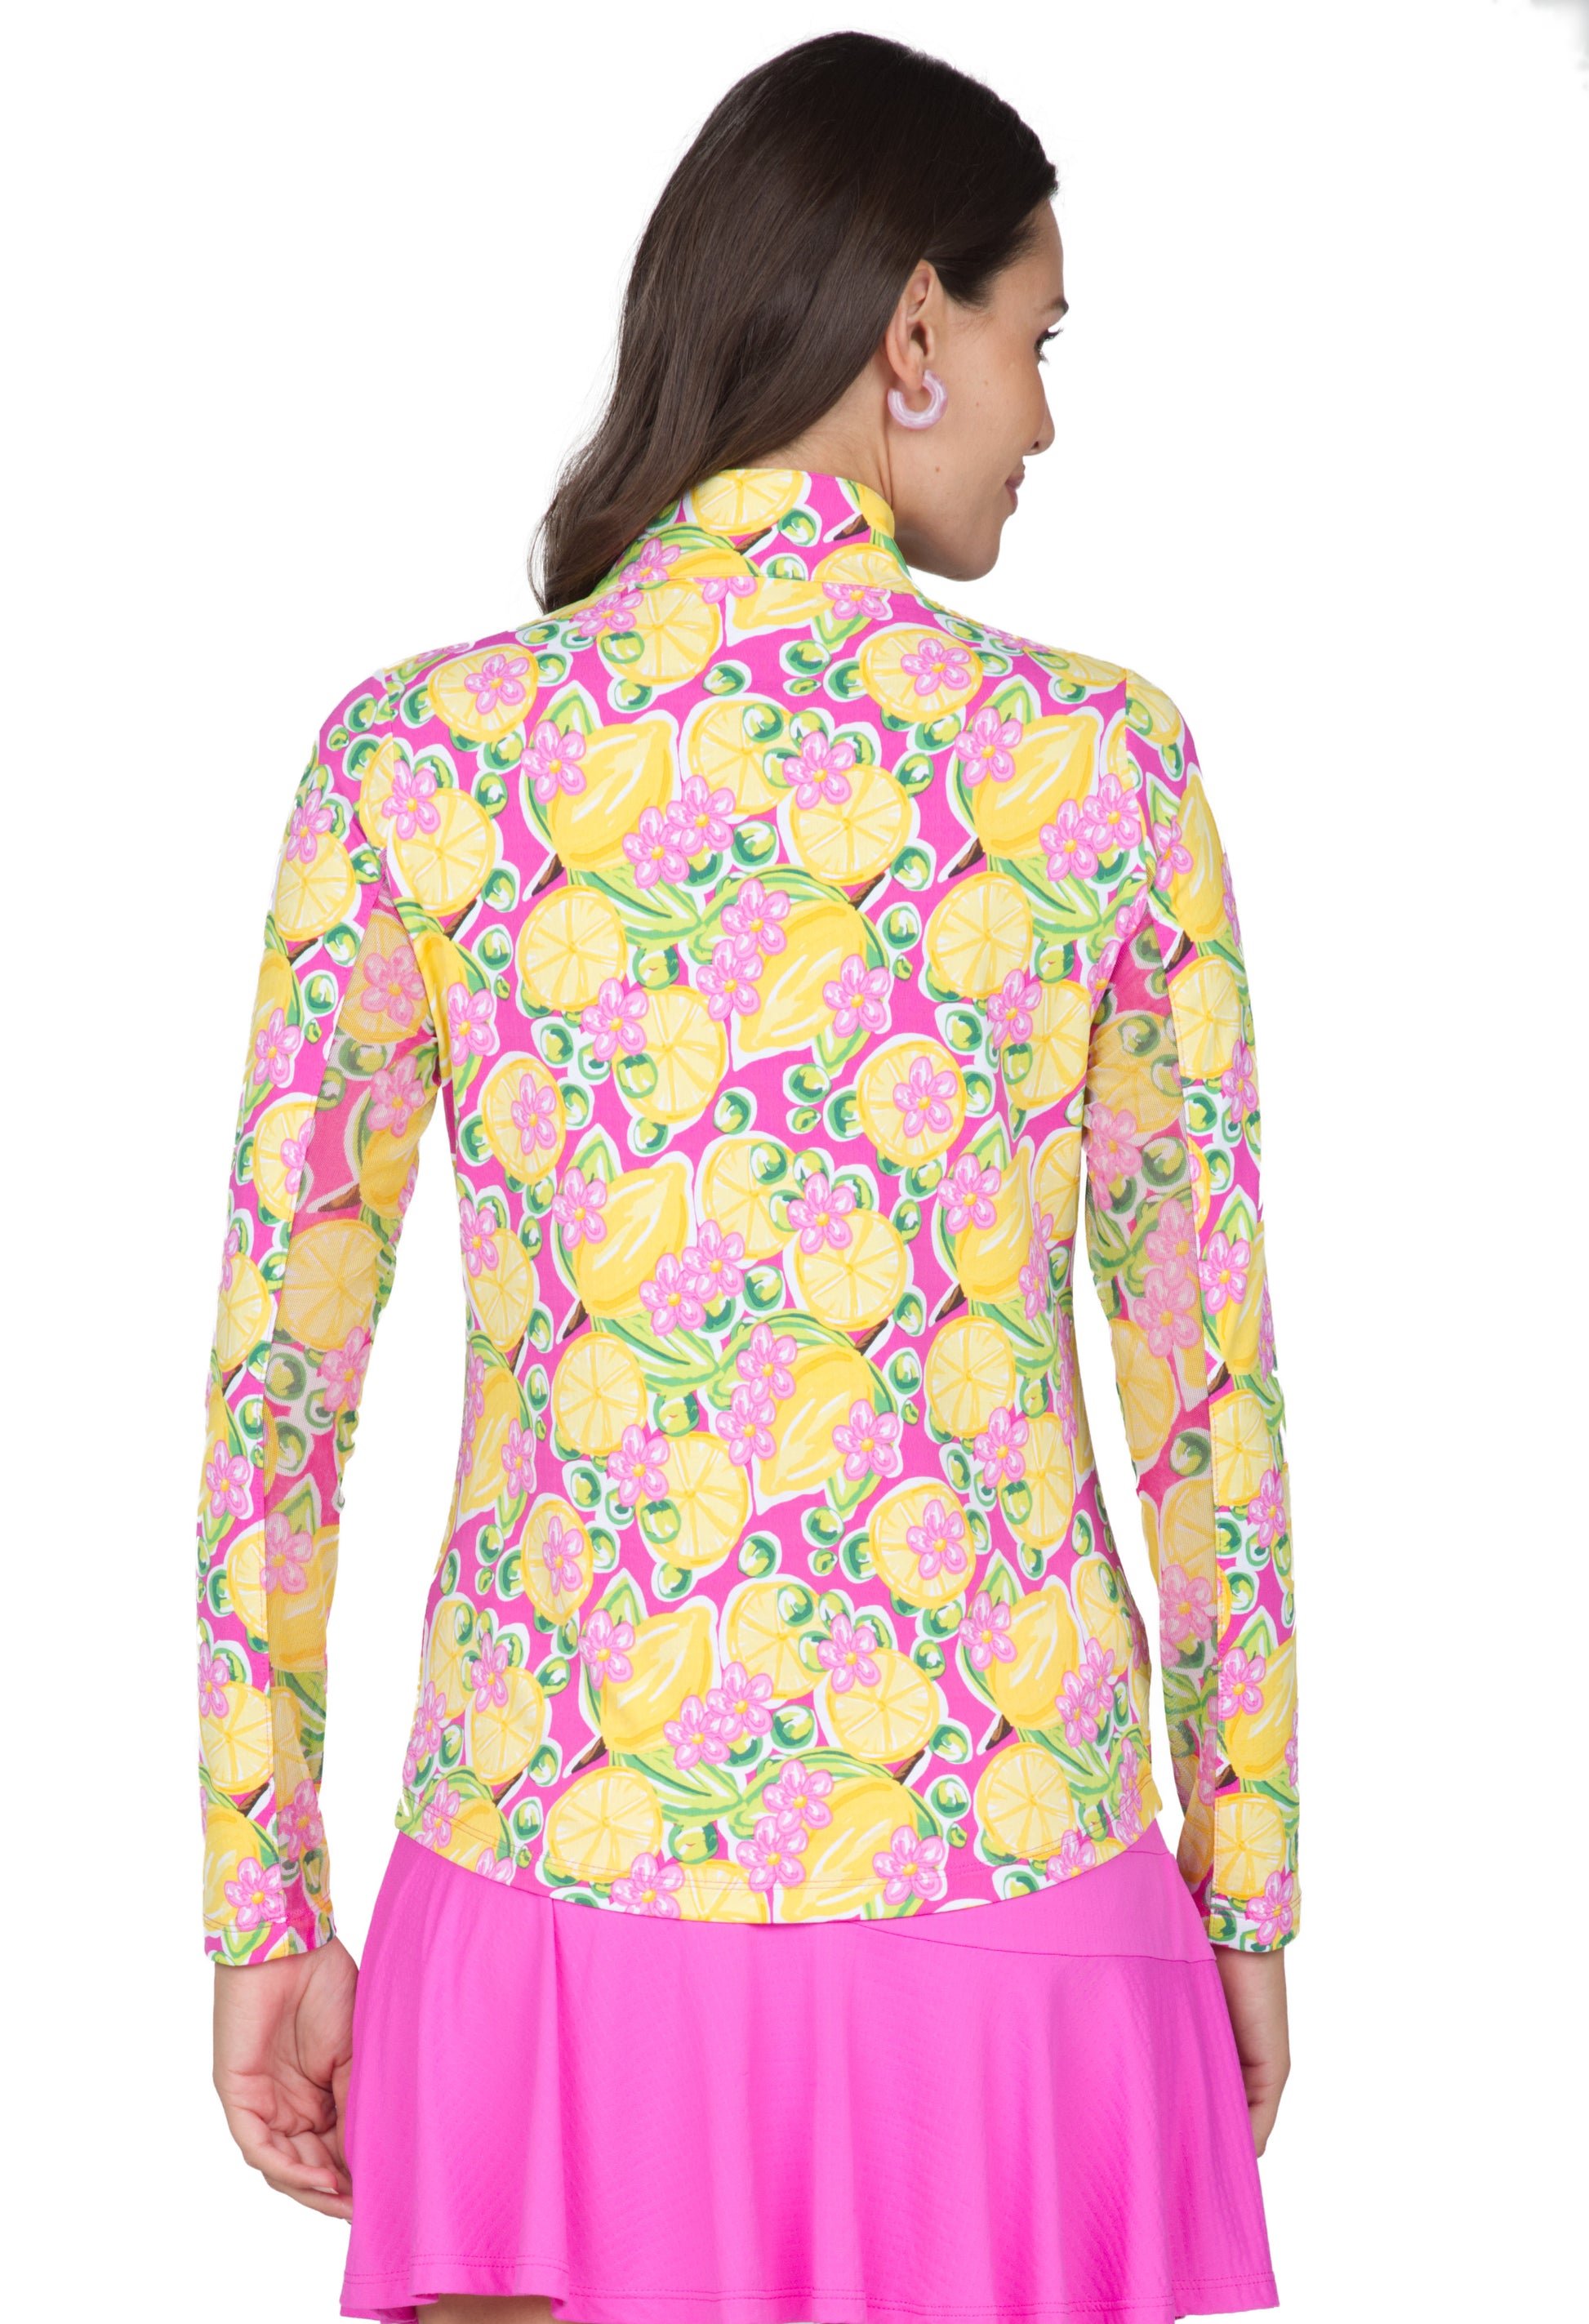 IBKÜL - Calista Print Long Sleeve Mock Neck Top – 10652 - Color: Hot Pink Multi